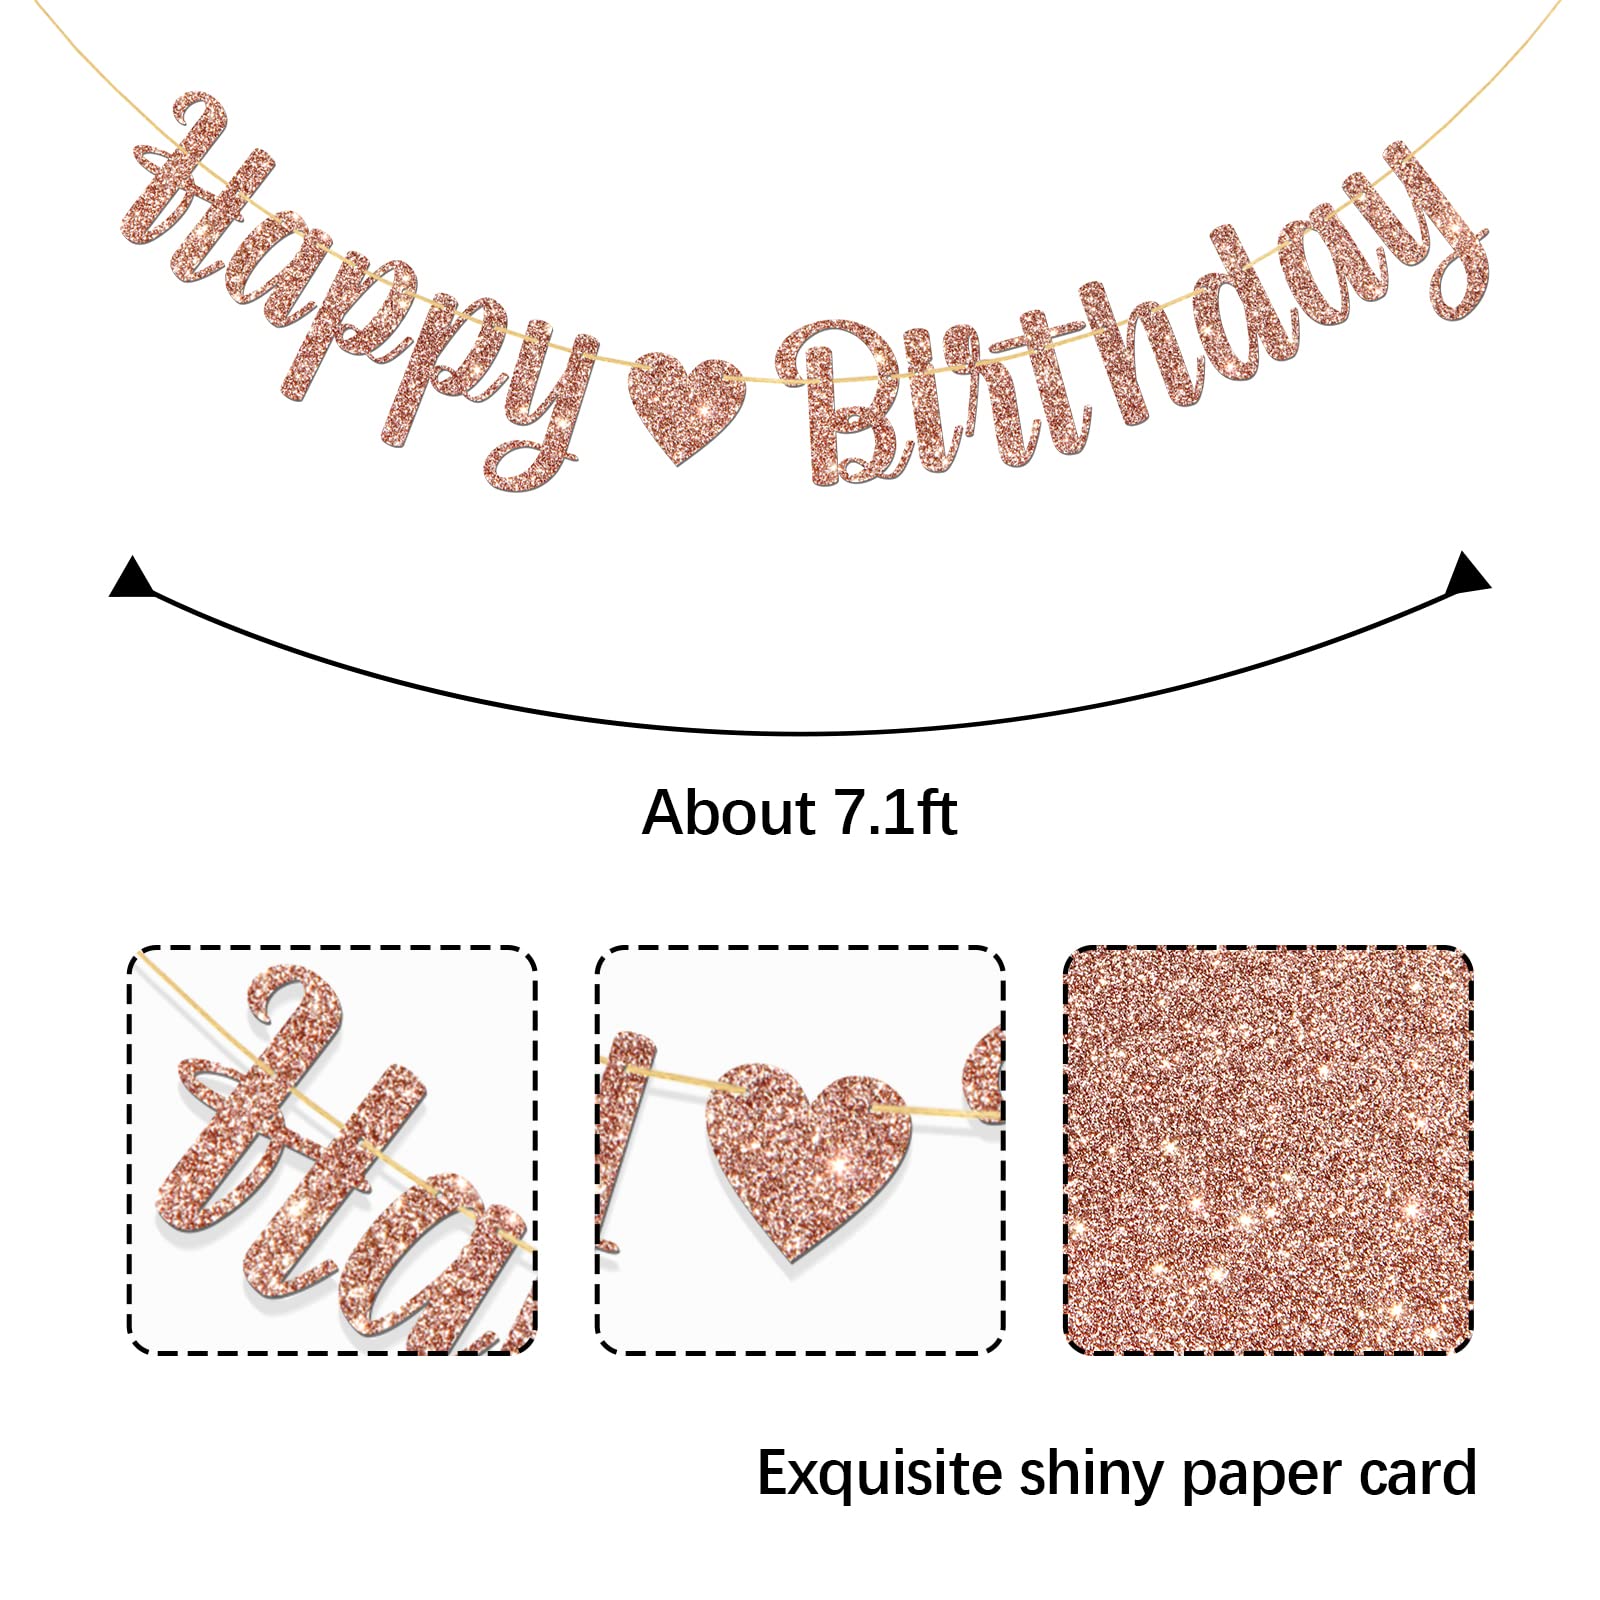 MonMon & Craft Happy Birthday Banner / Children Adults Boys Girls Birthday Party Decor / Birthday Party Decorations Rose Gold Glitter